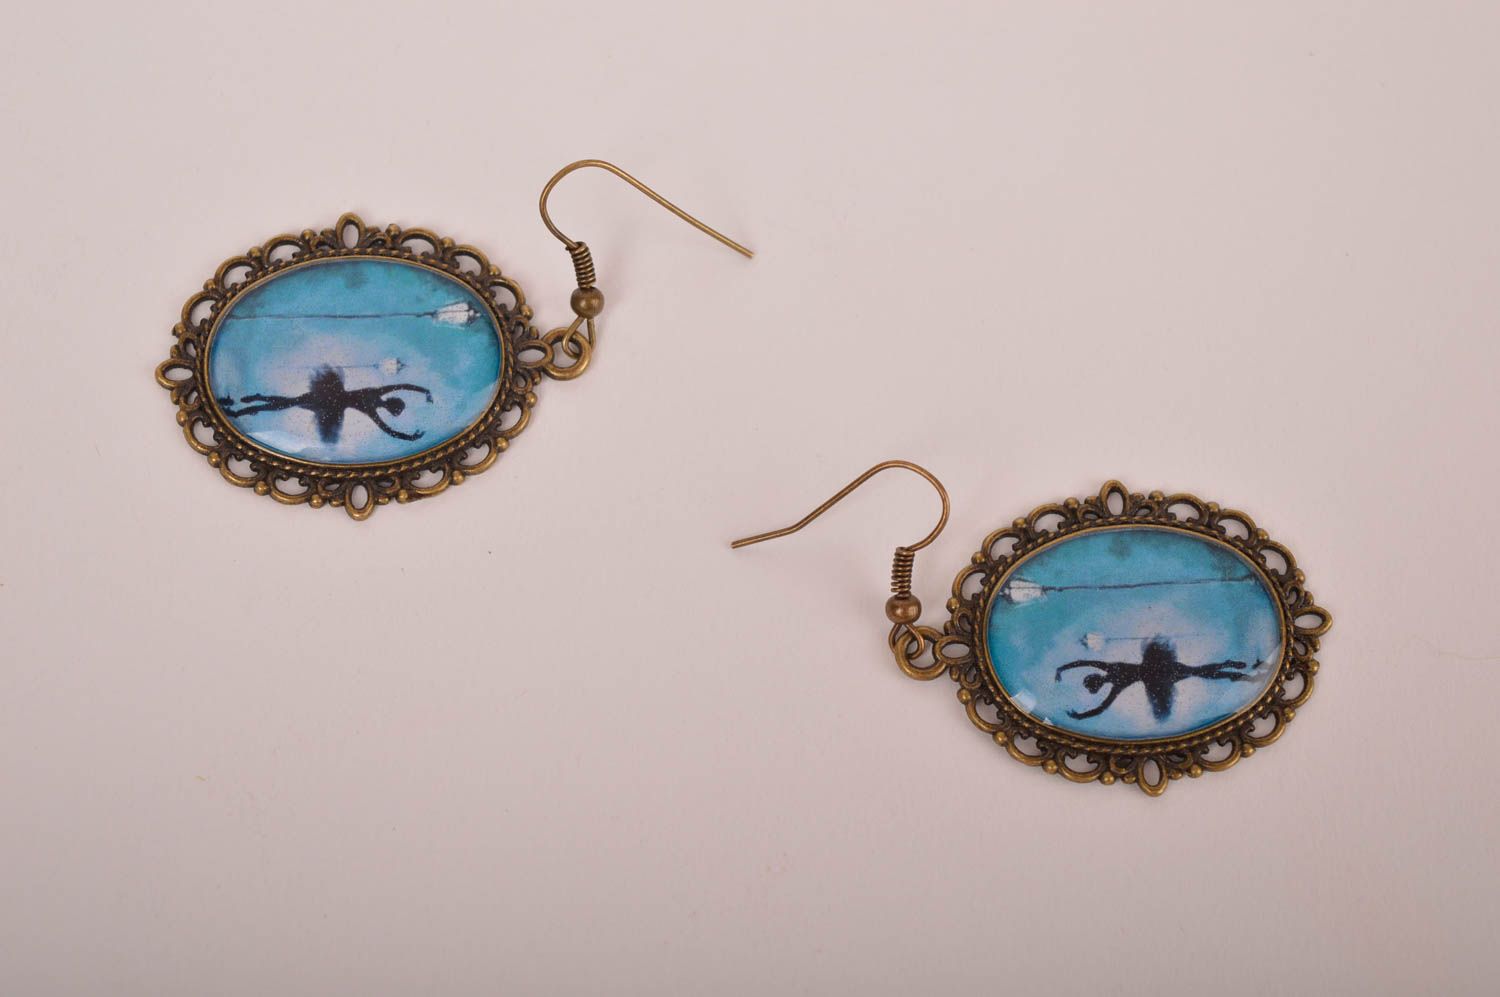 Handmade earrings designer jewelry fashion earrings gifts for girls cool jewelry photo 4